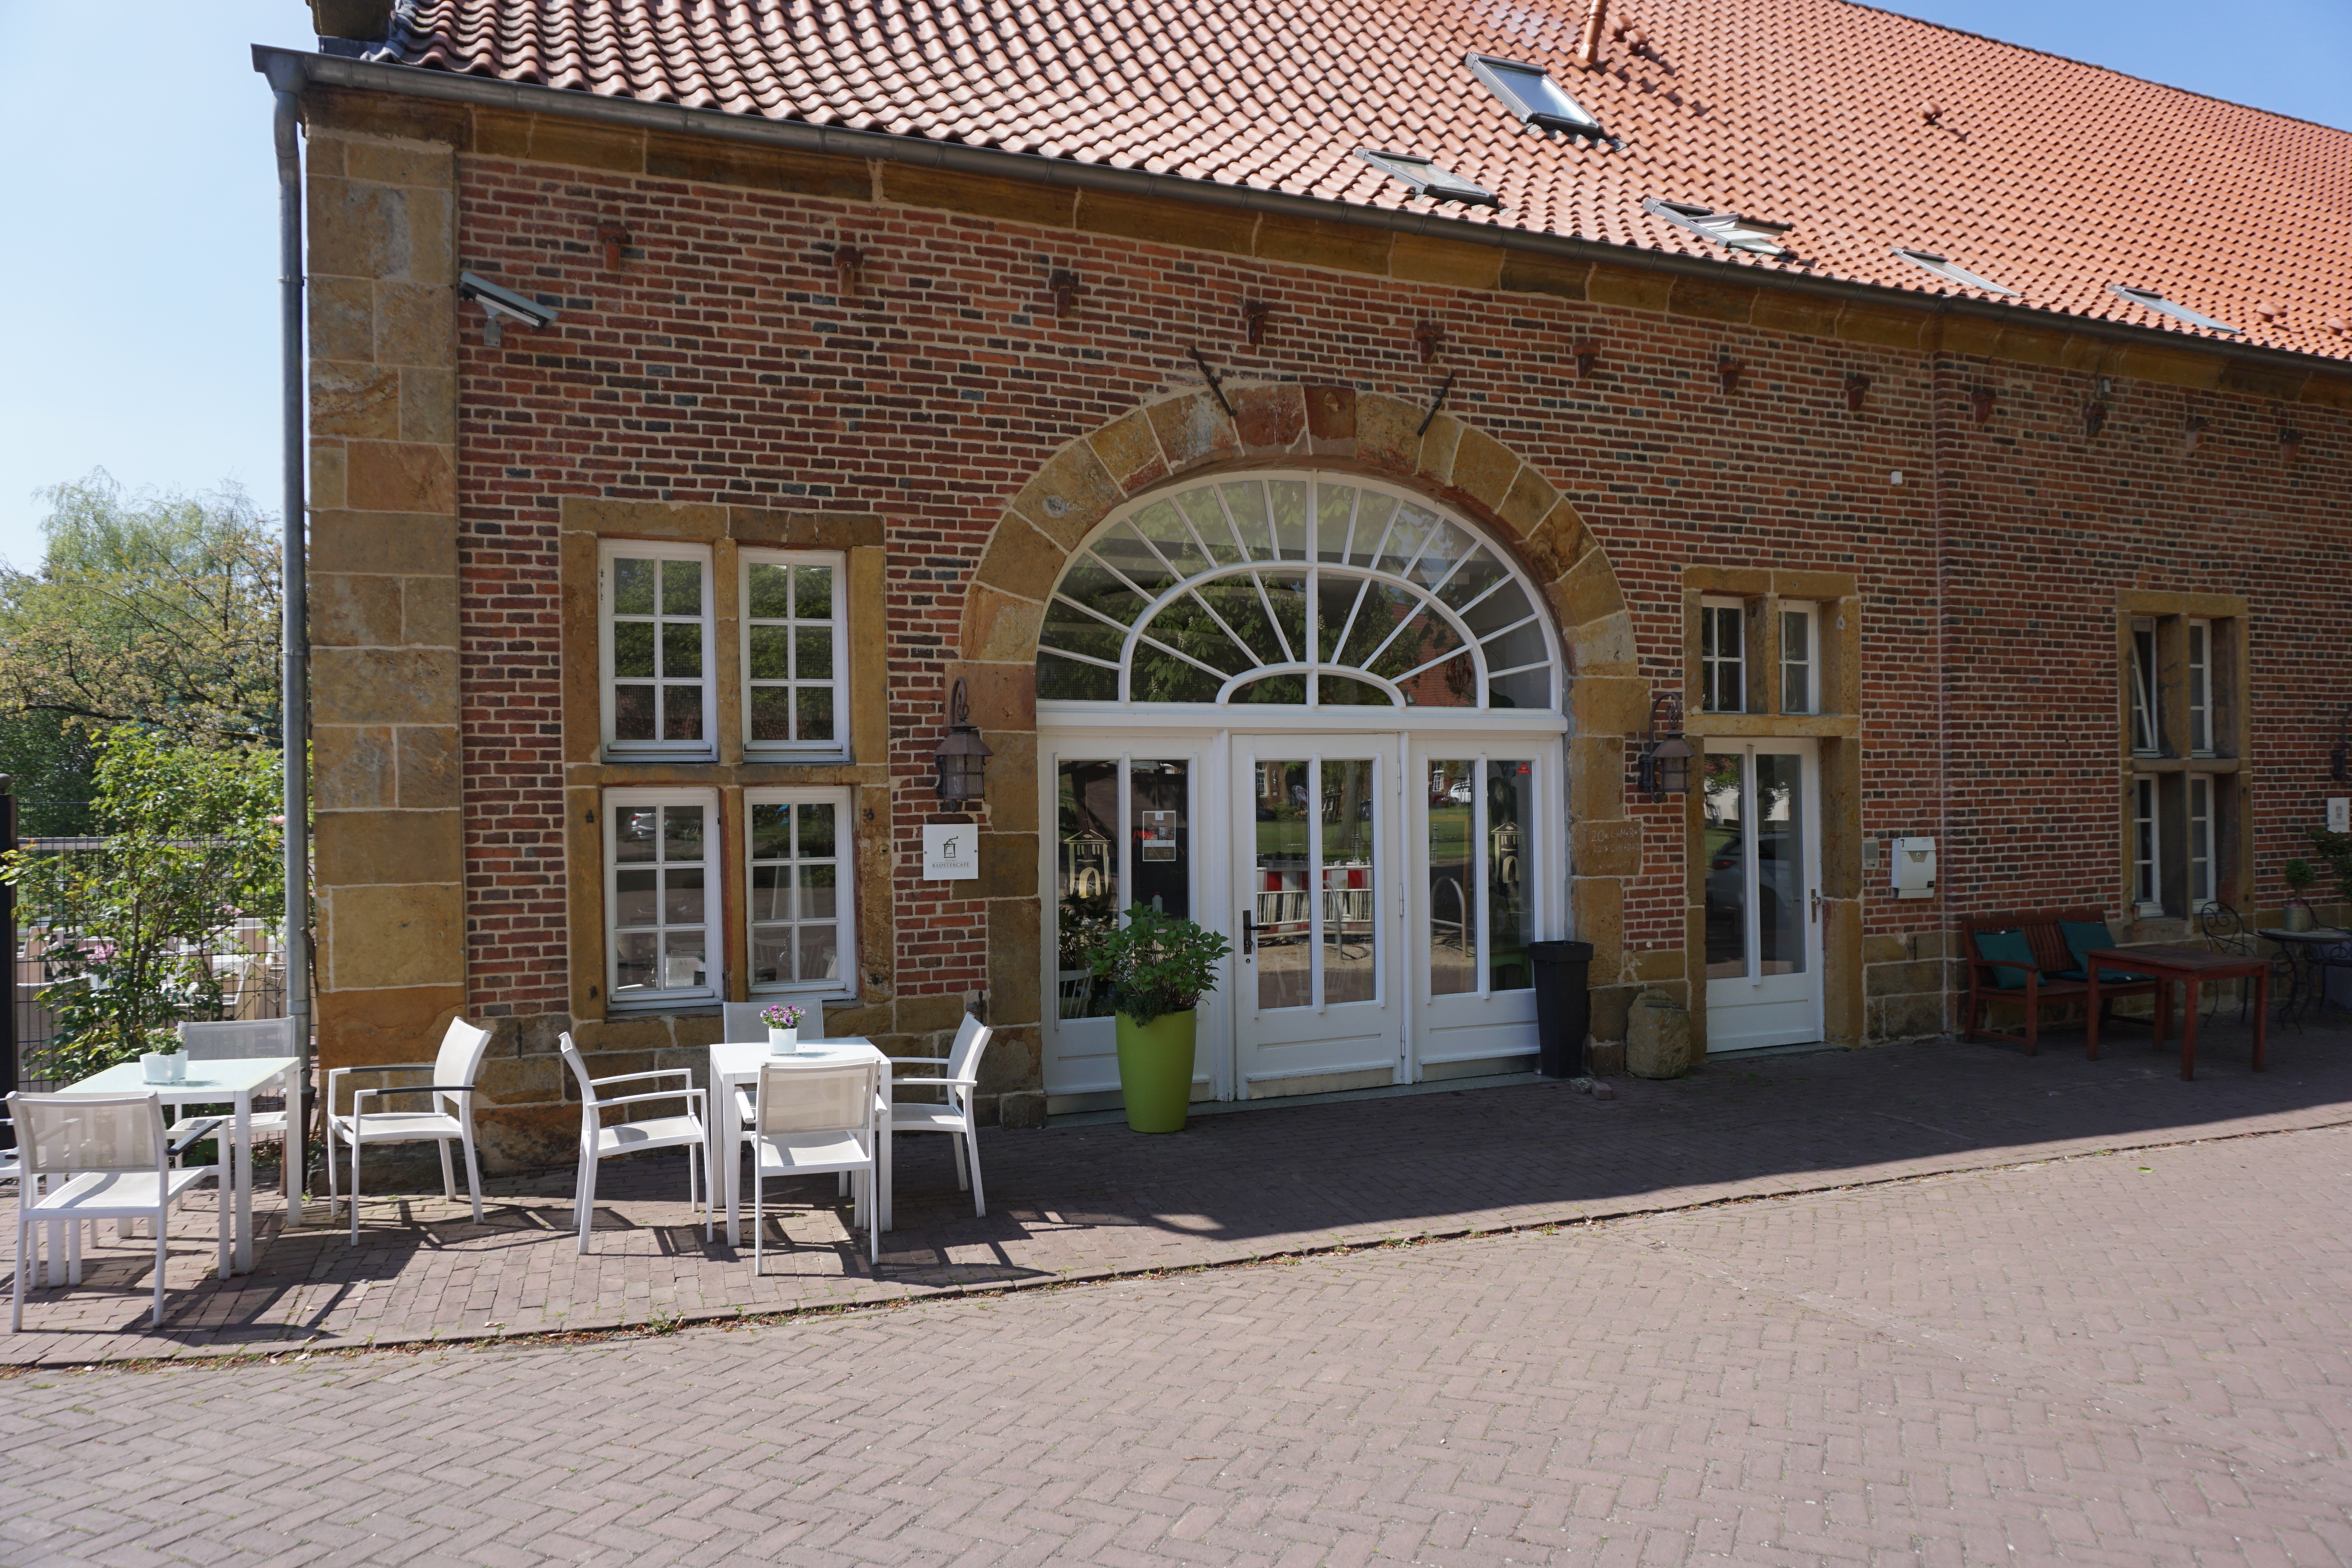 Klostercafé Marienfeld, Harsewinkel.
